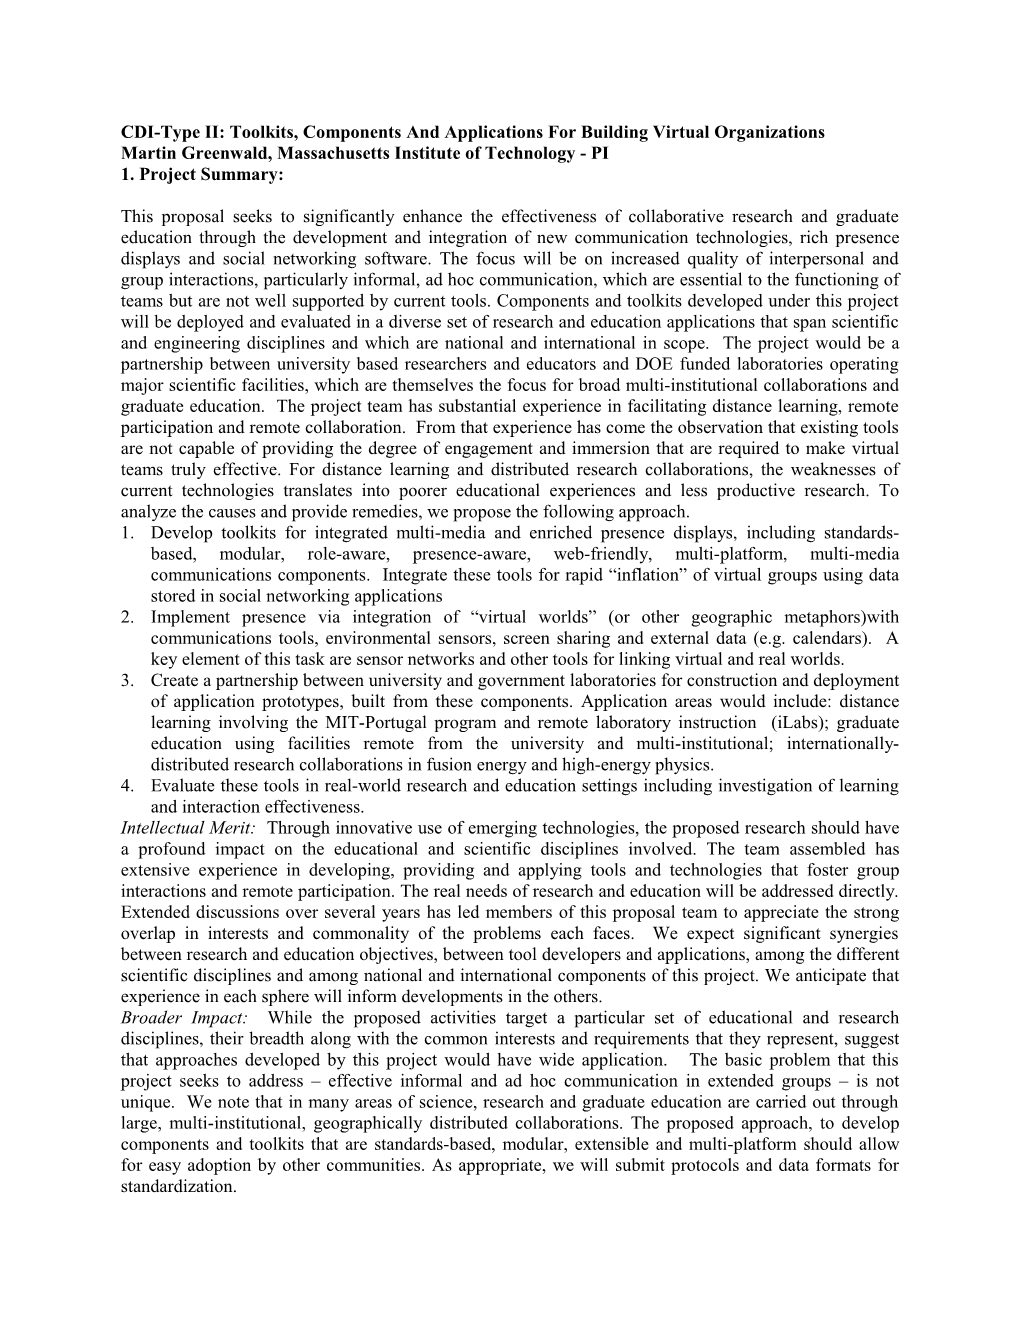 NSF-CDI Preliminary Proposal